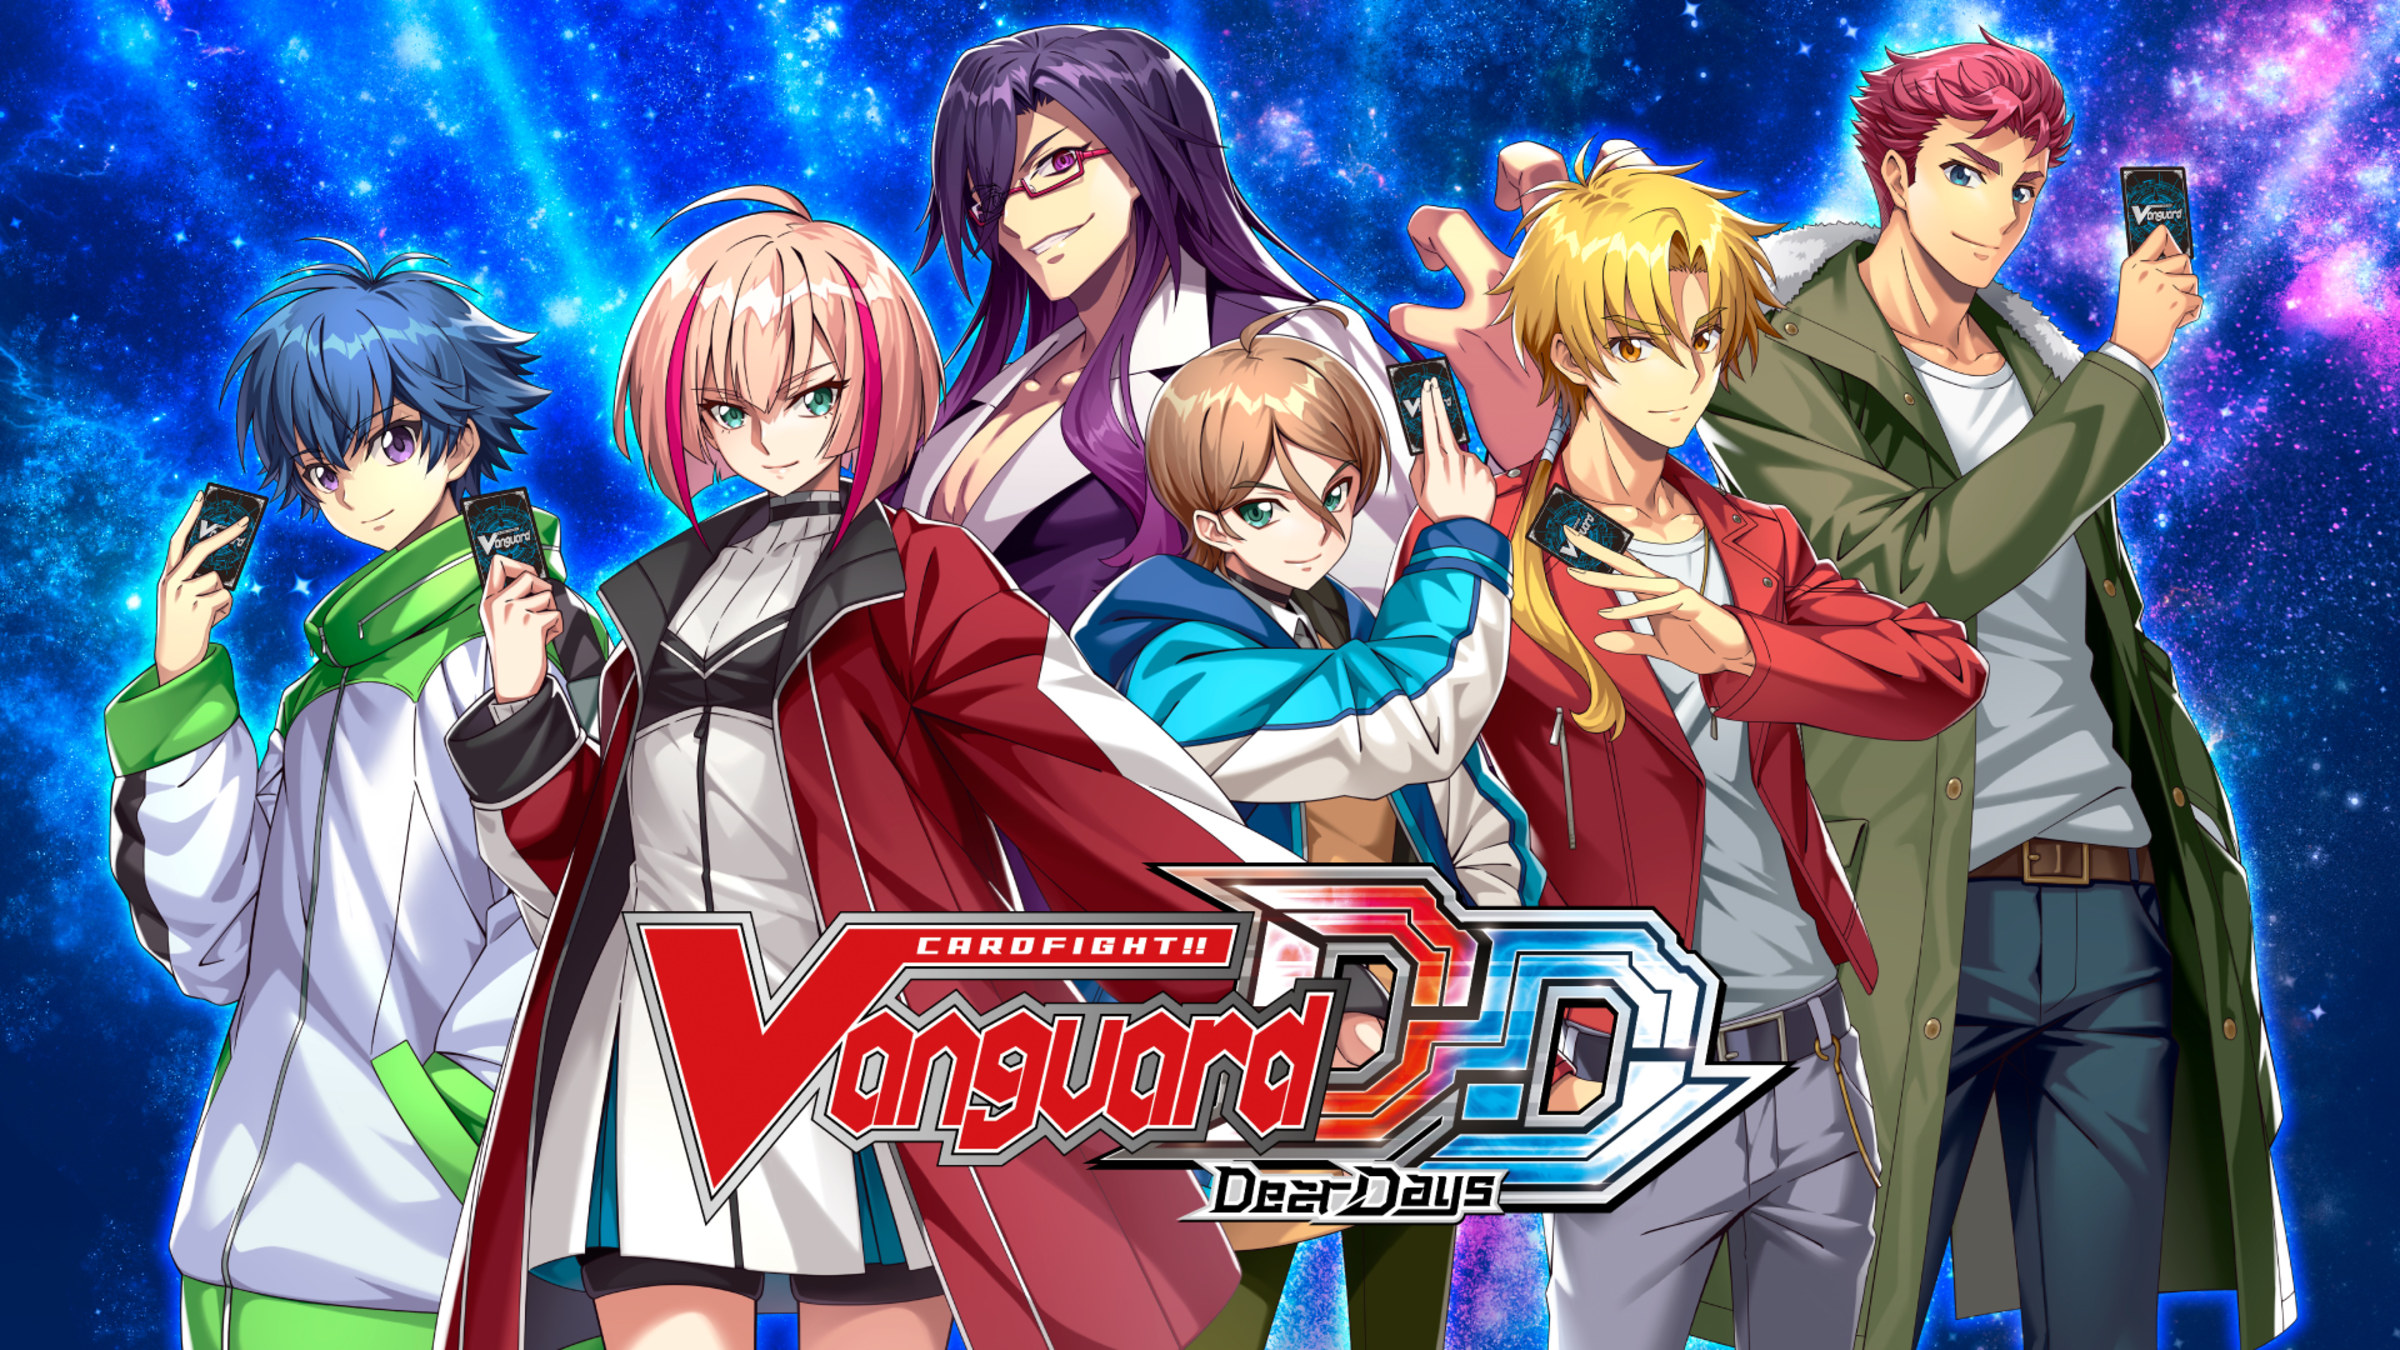 Cardfight!! Vanguard Dear Days for Nintendo Switch - Nintendo Official Site